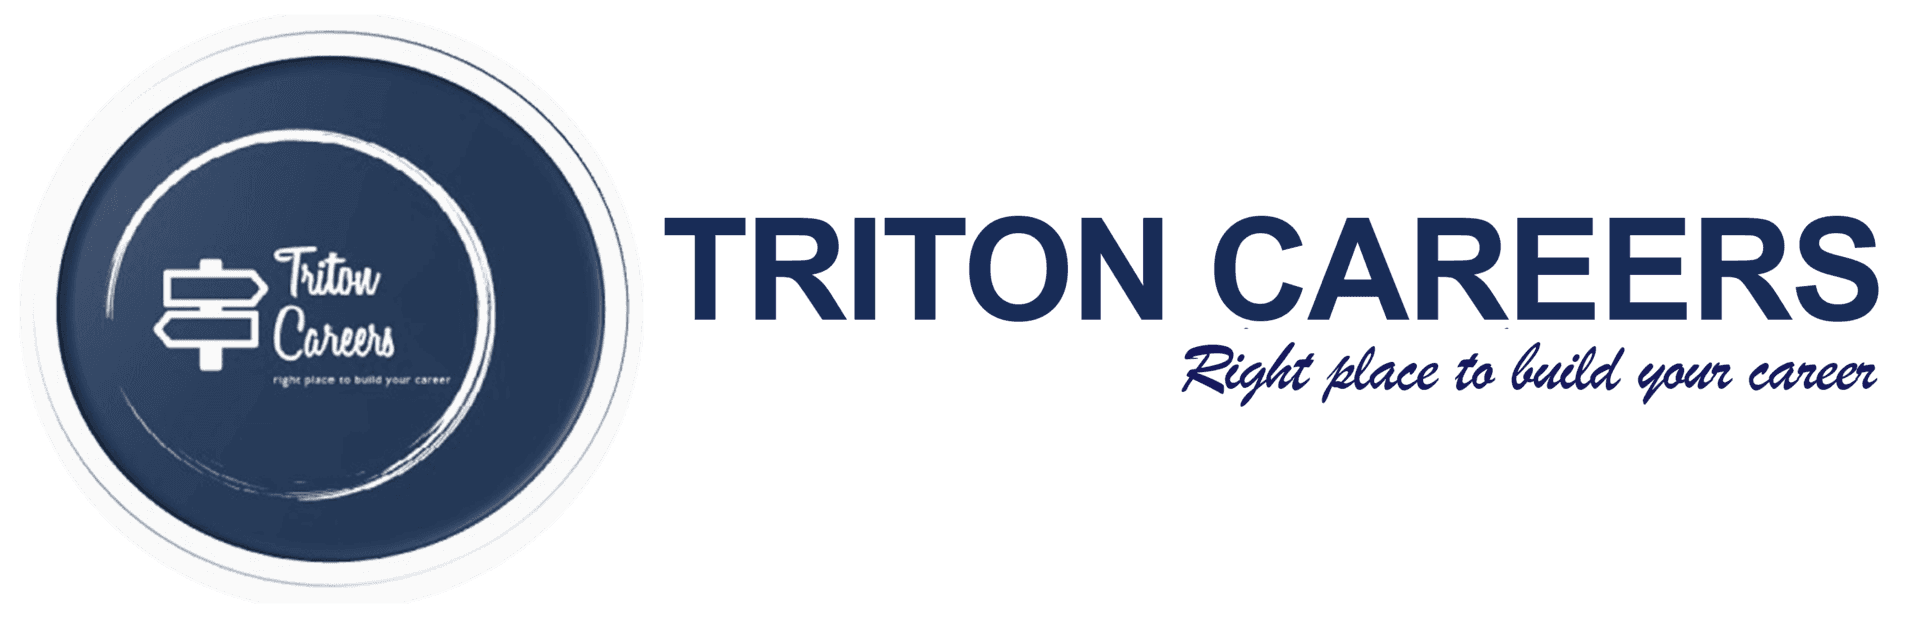 Triton Careers